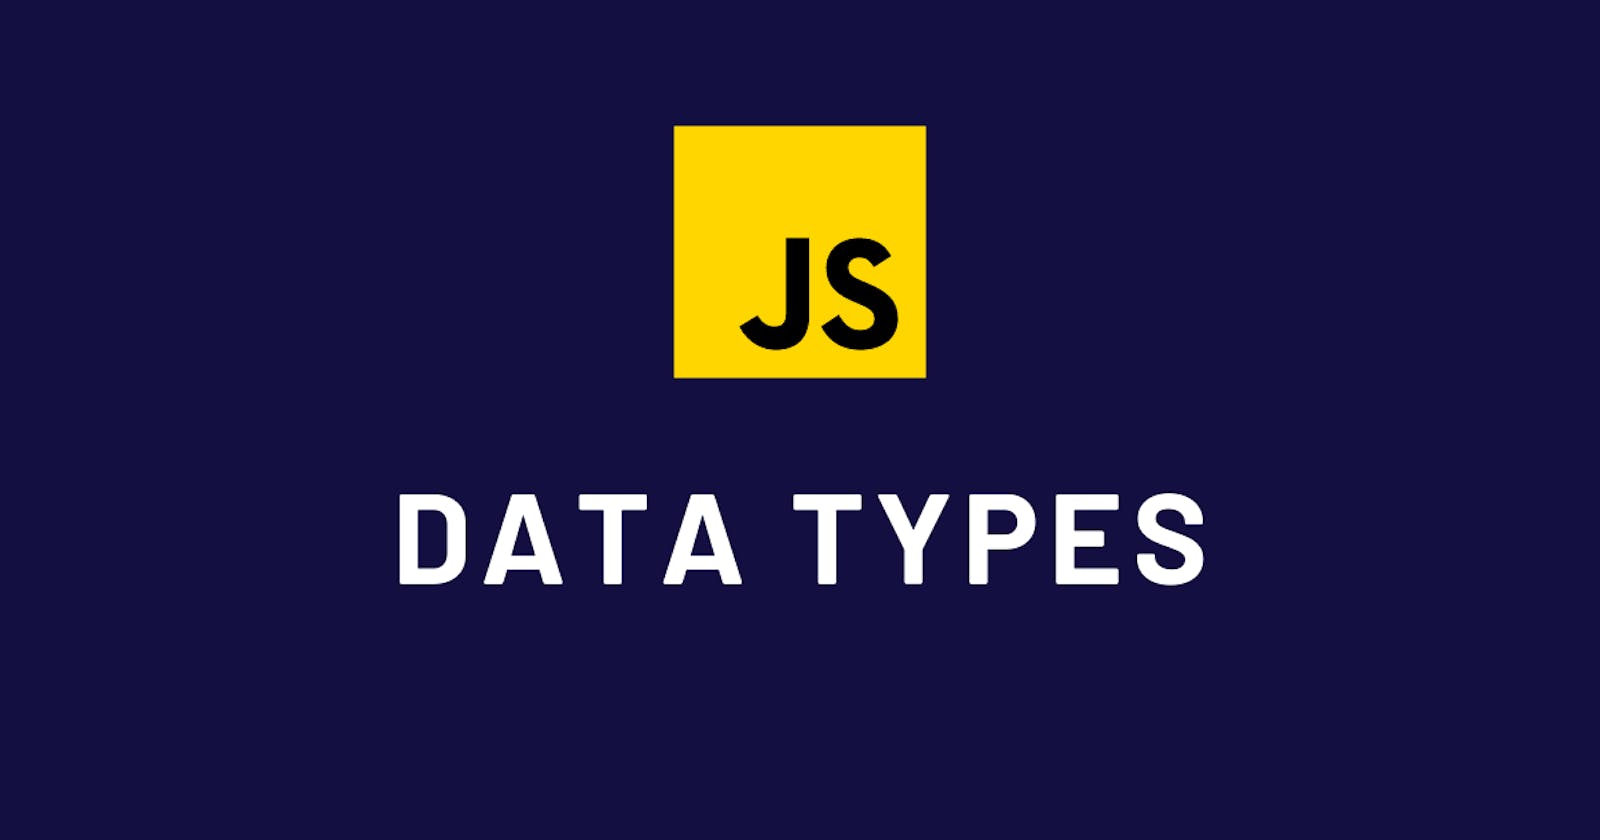 JavaScript data types in-depth